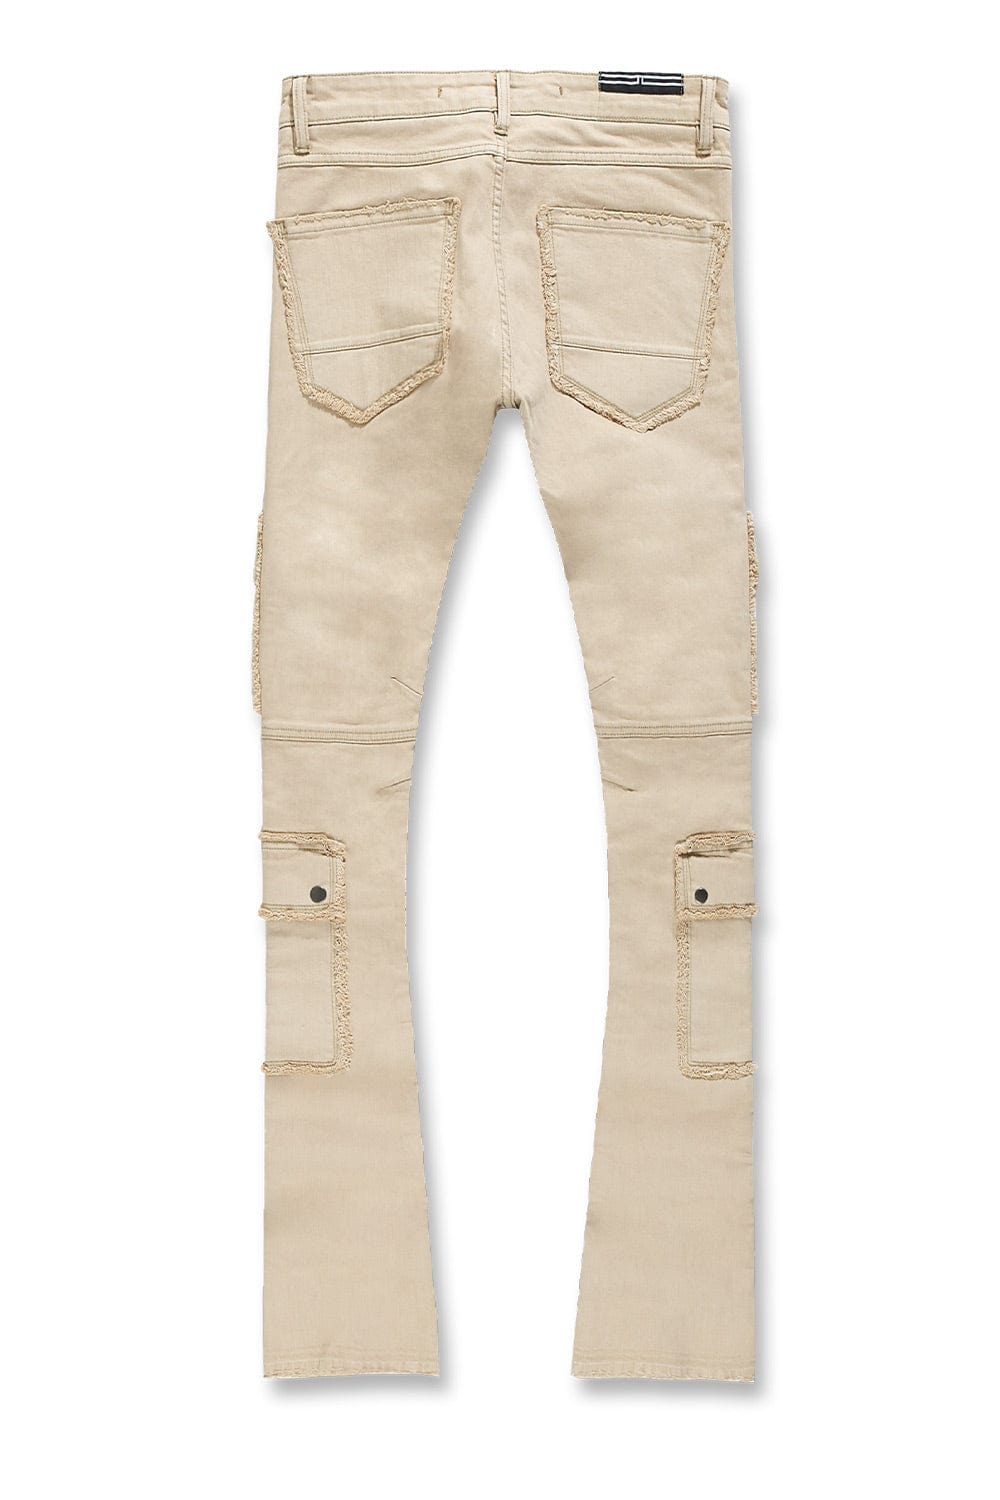 Martin Stacked - El Dorado Cargo Pants (Khaki)